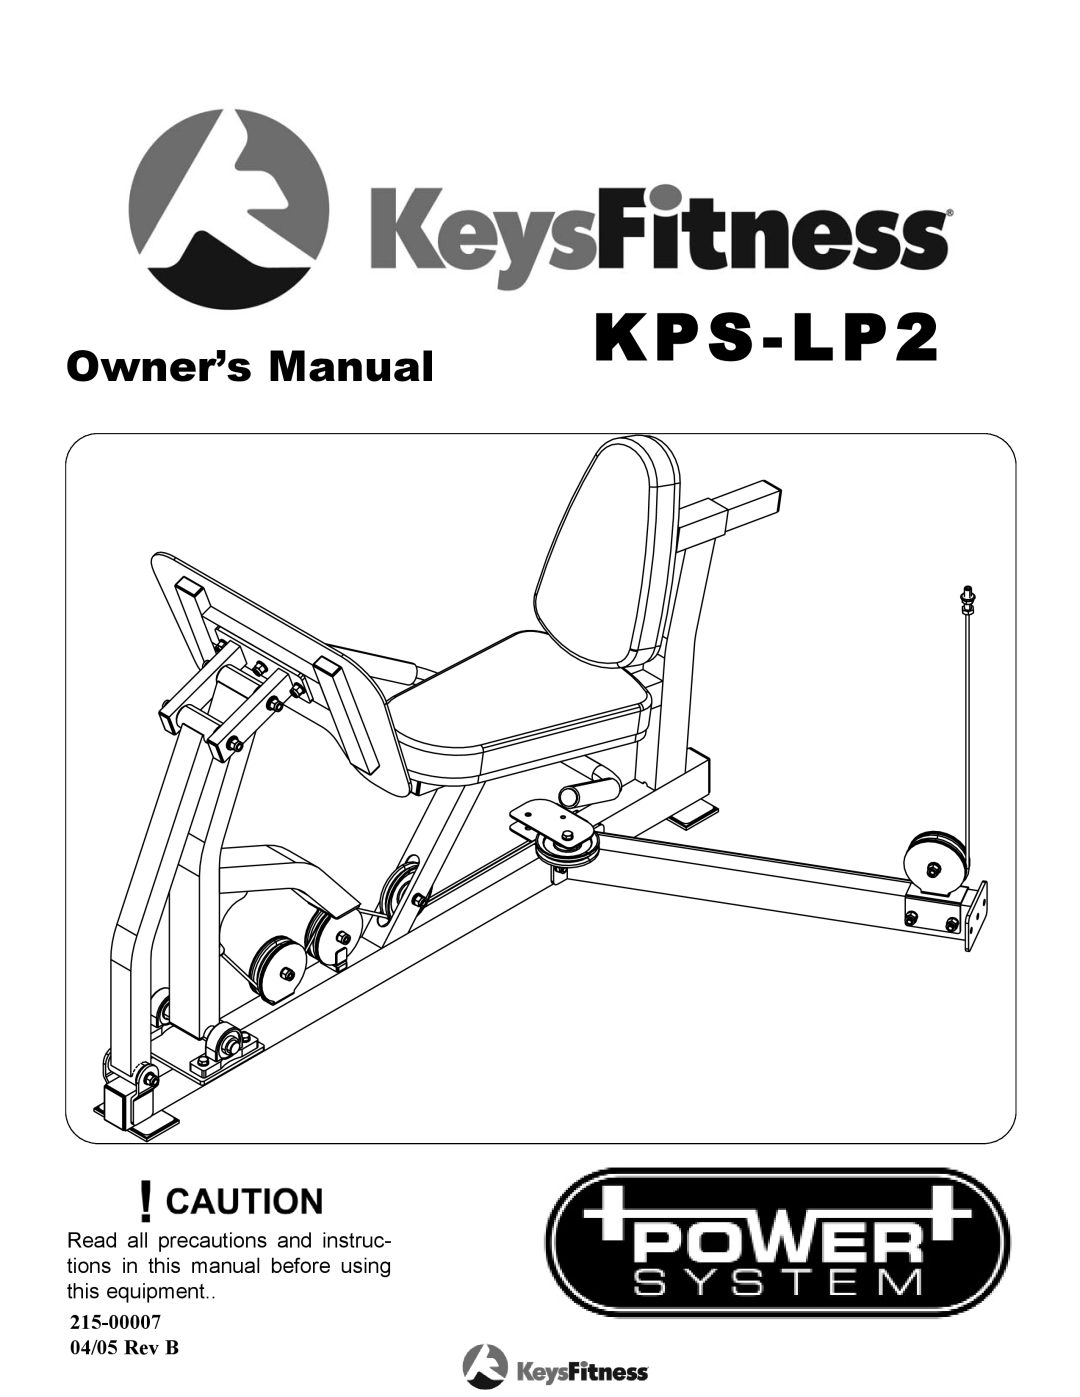 Keys Fitness KPS-LP2 owner manual 